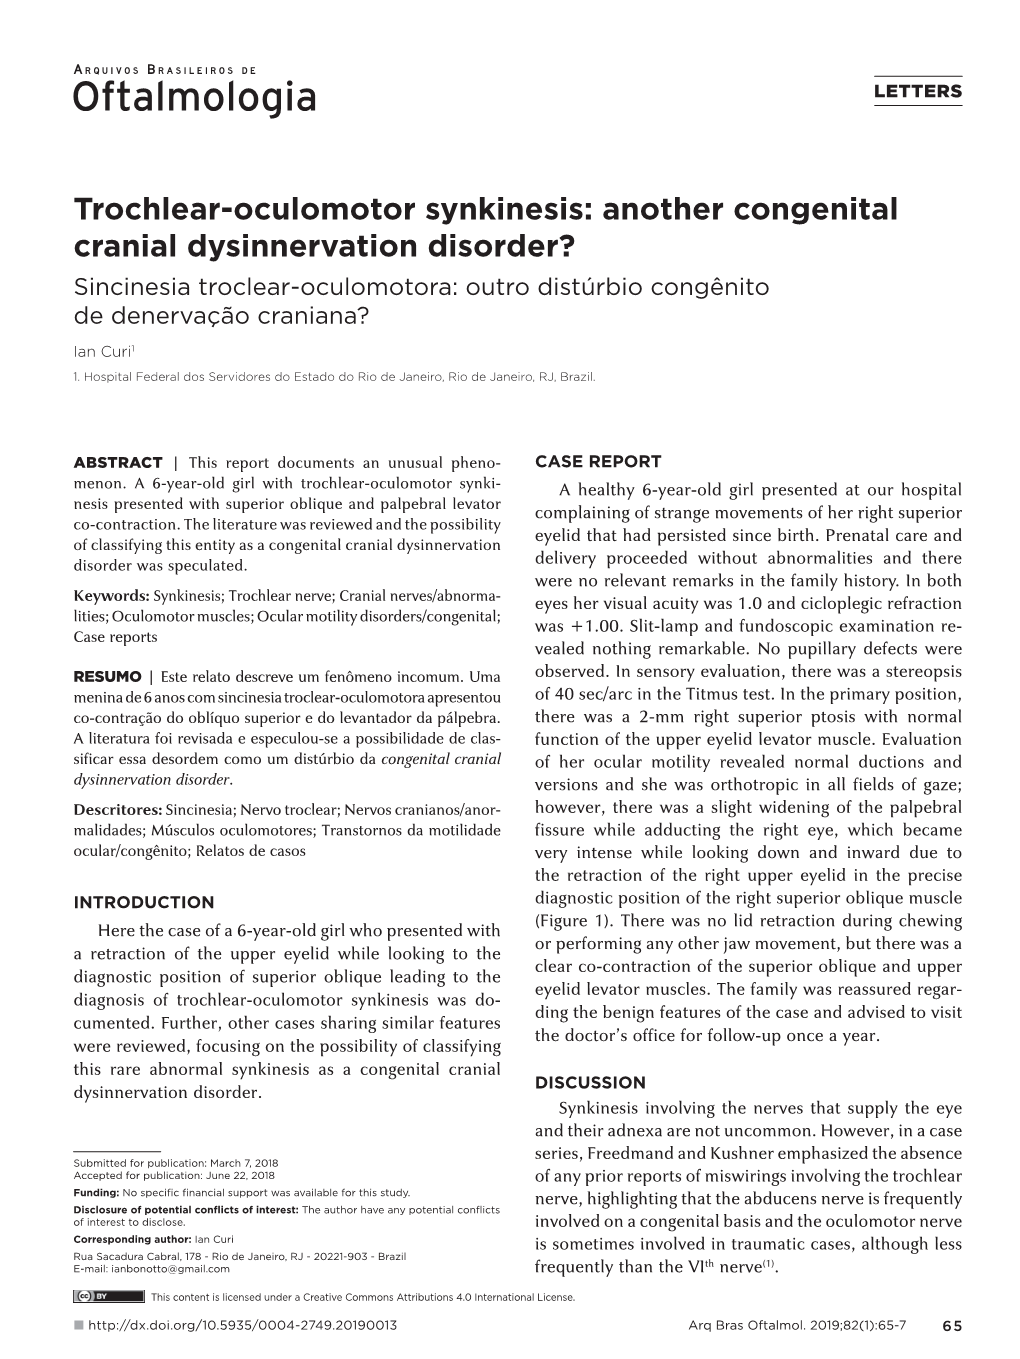 Trochlear-Oculomotor Synkinesis